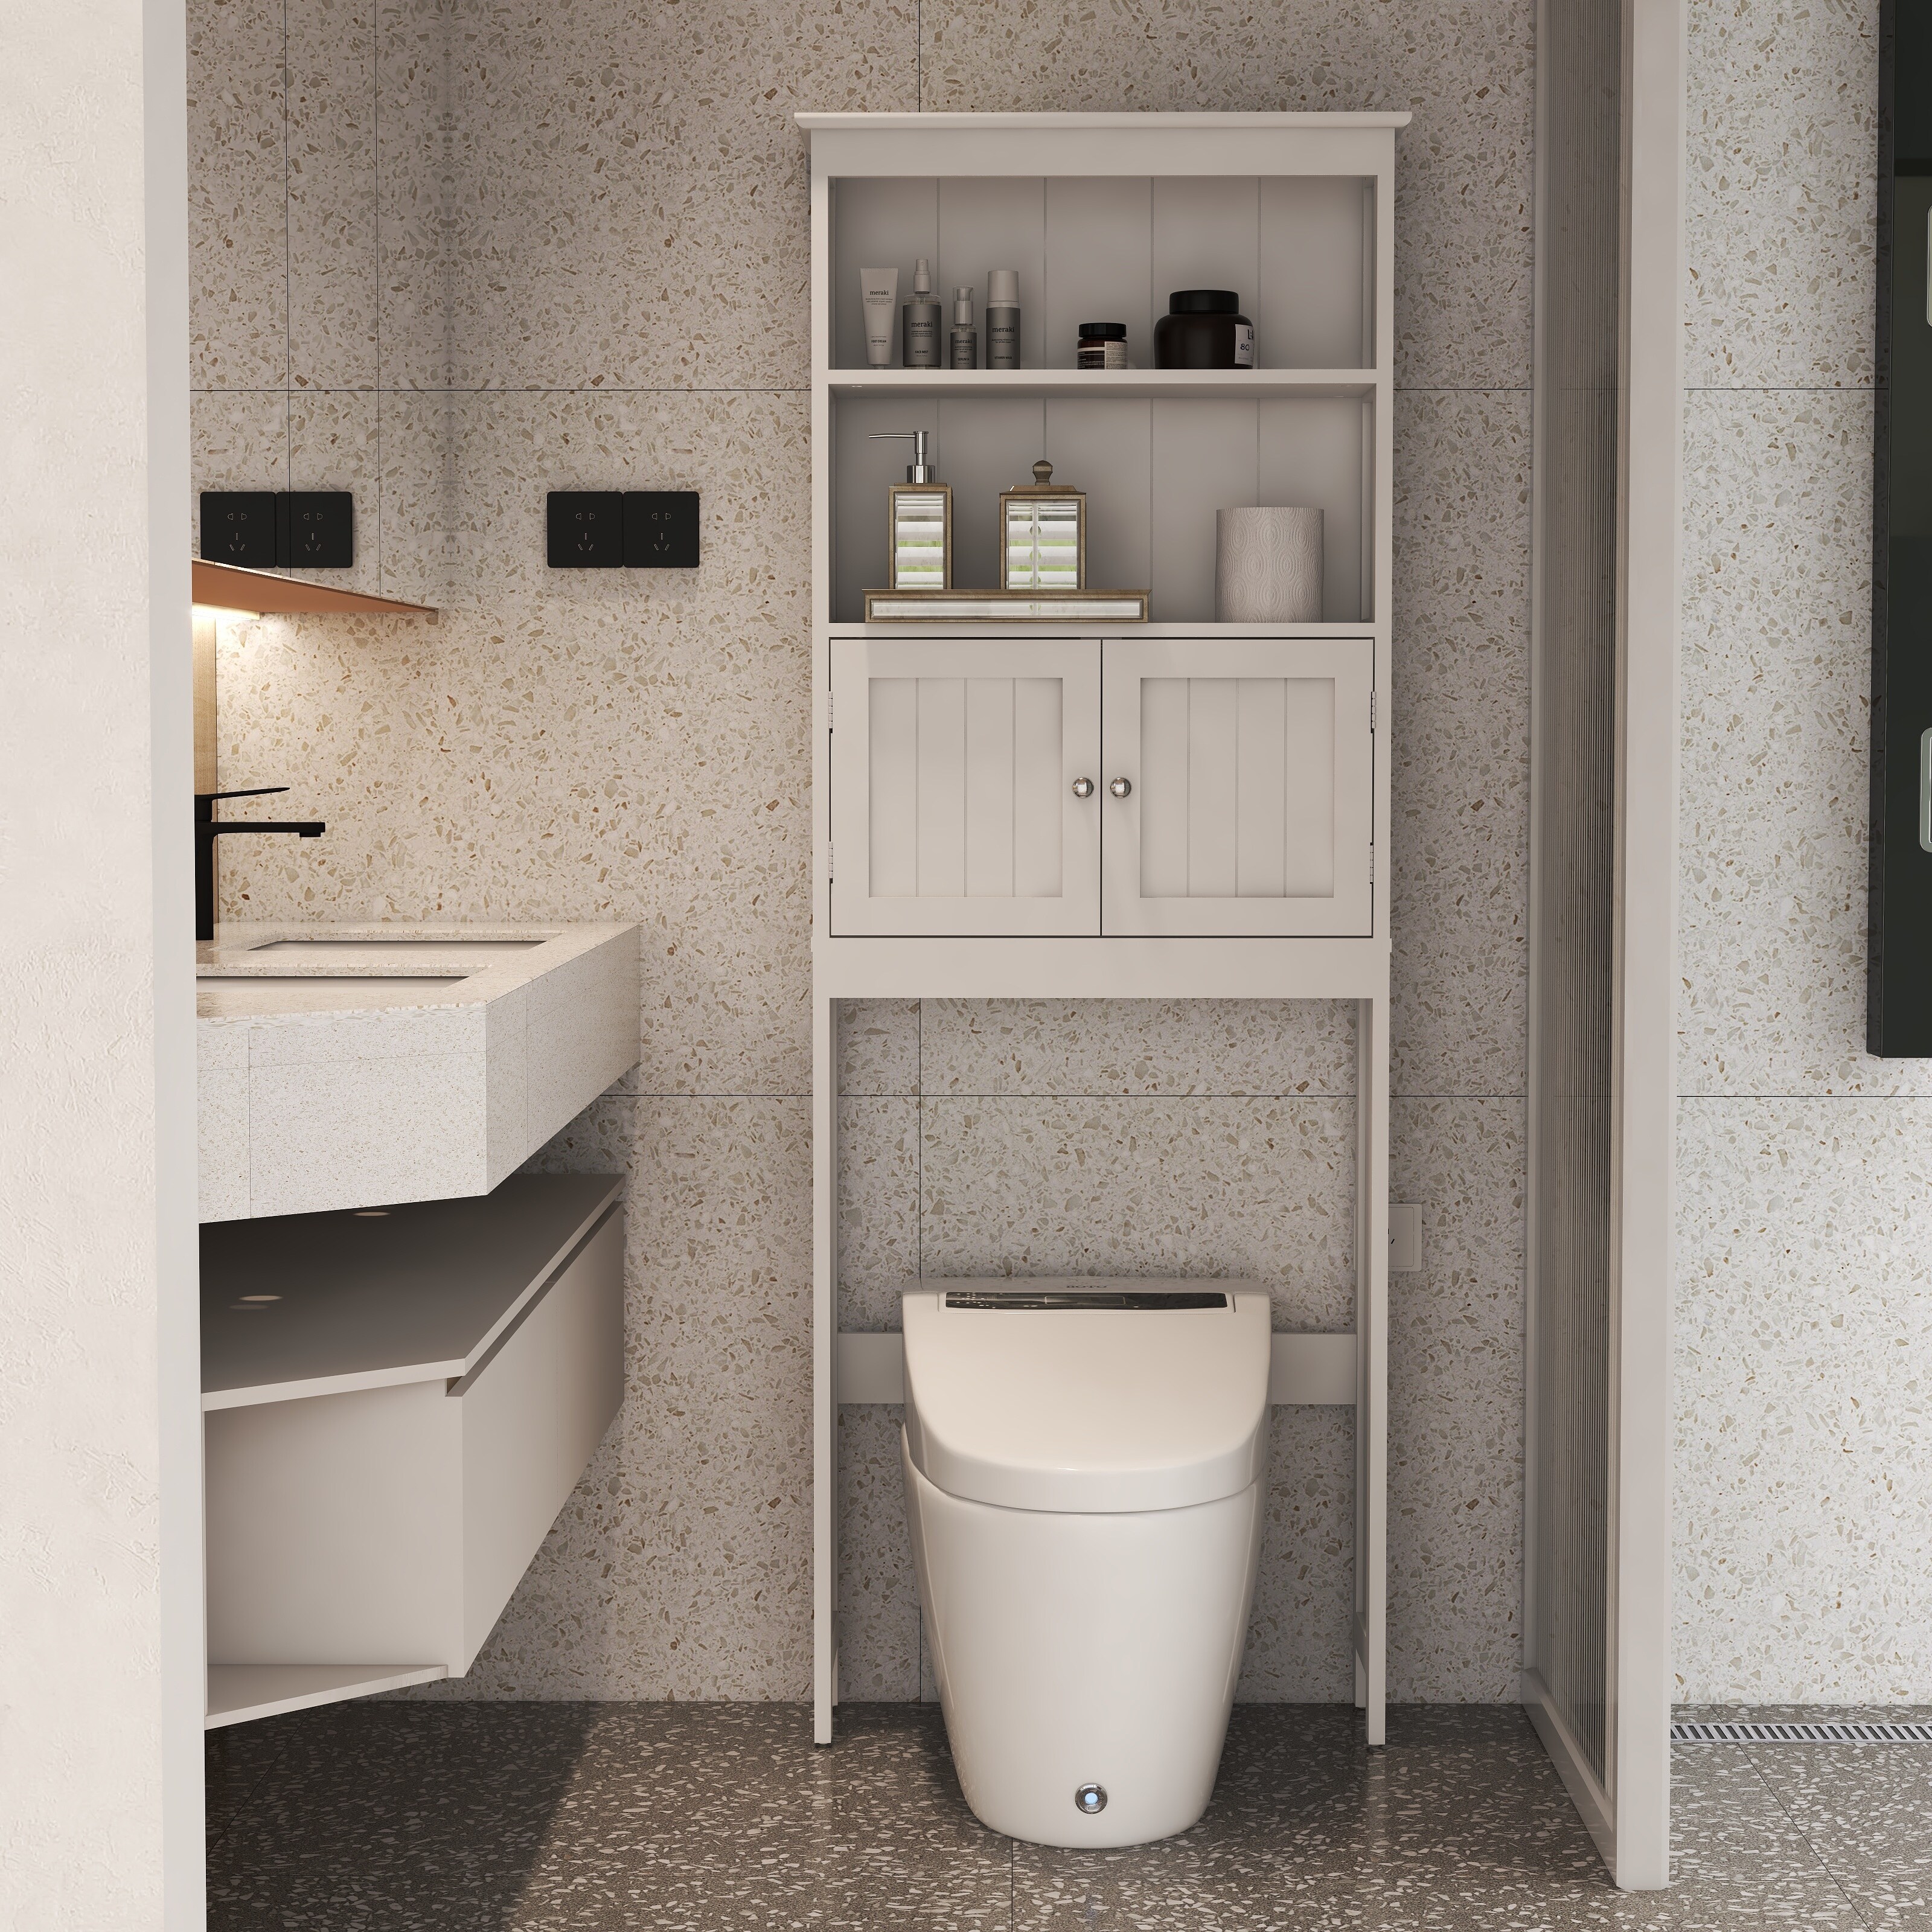 White Bathroom Shelves for Small Spaces 2 Tier Bathroom Shelving